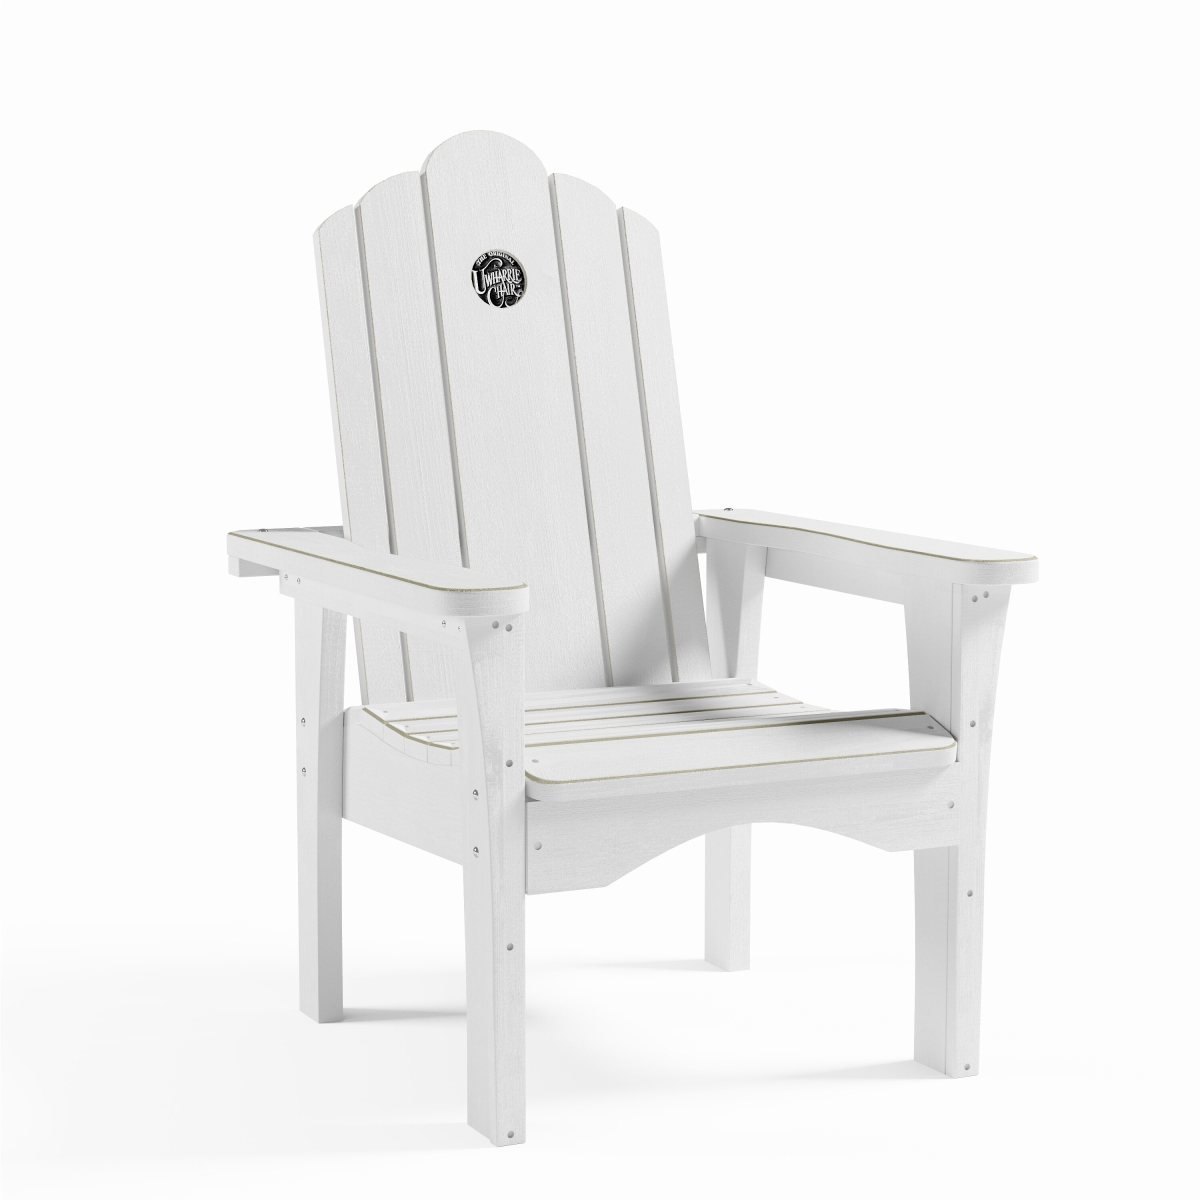 S114-025 Original Wood Lounge Chair, Apple Green Pine - 30.5 X 33.5 X 43.5 In.